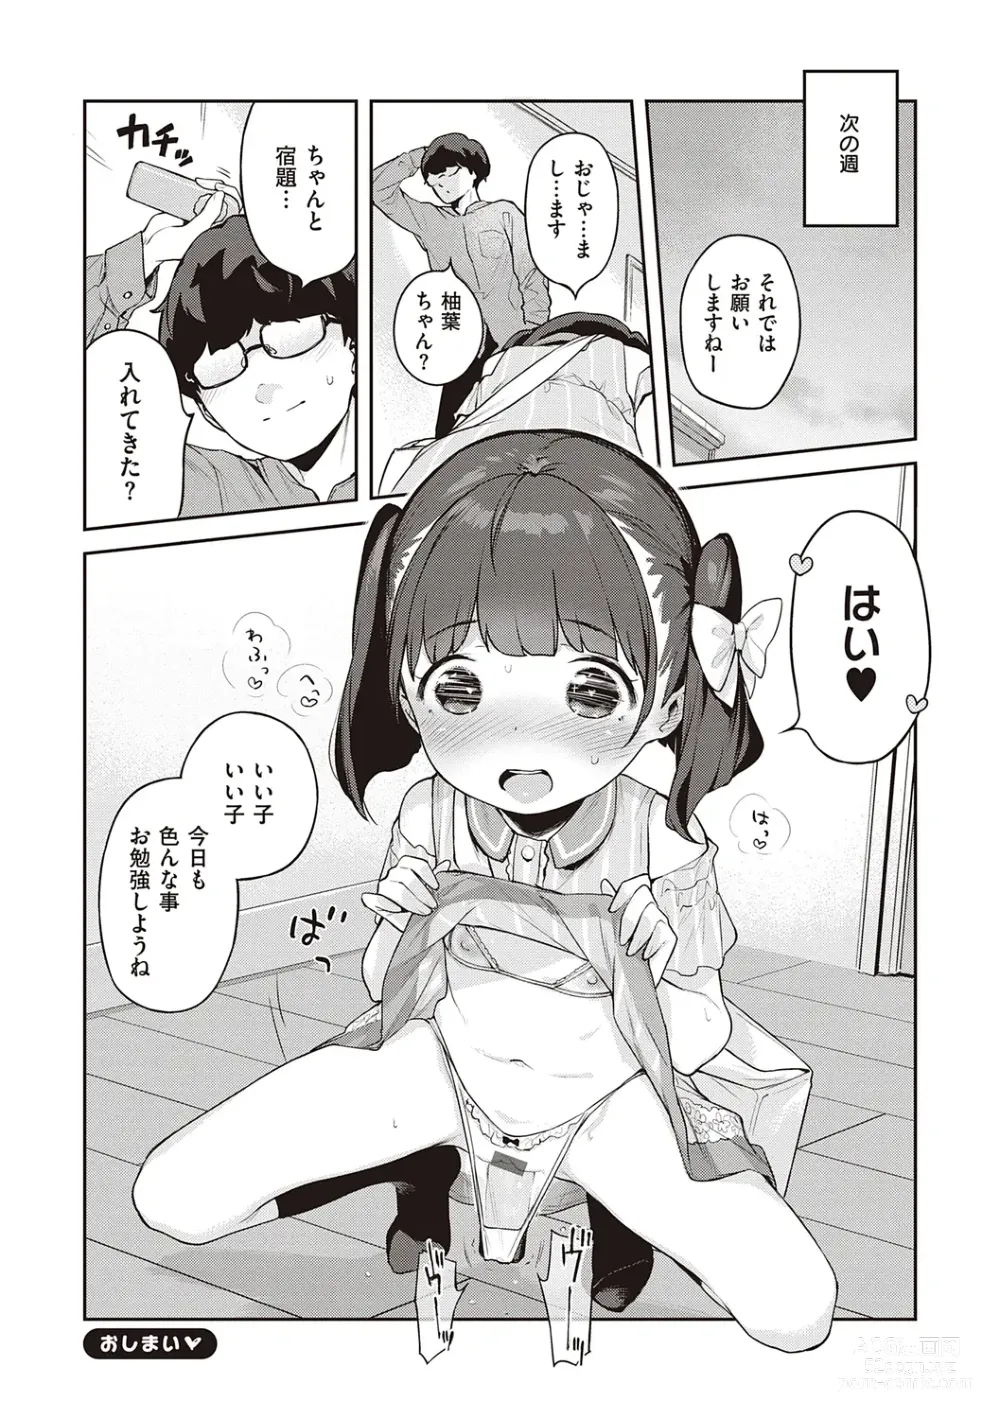 Page 320 of manga Motto! Hatsukoi Ribbon.